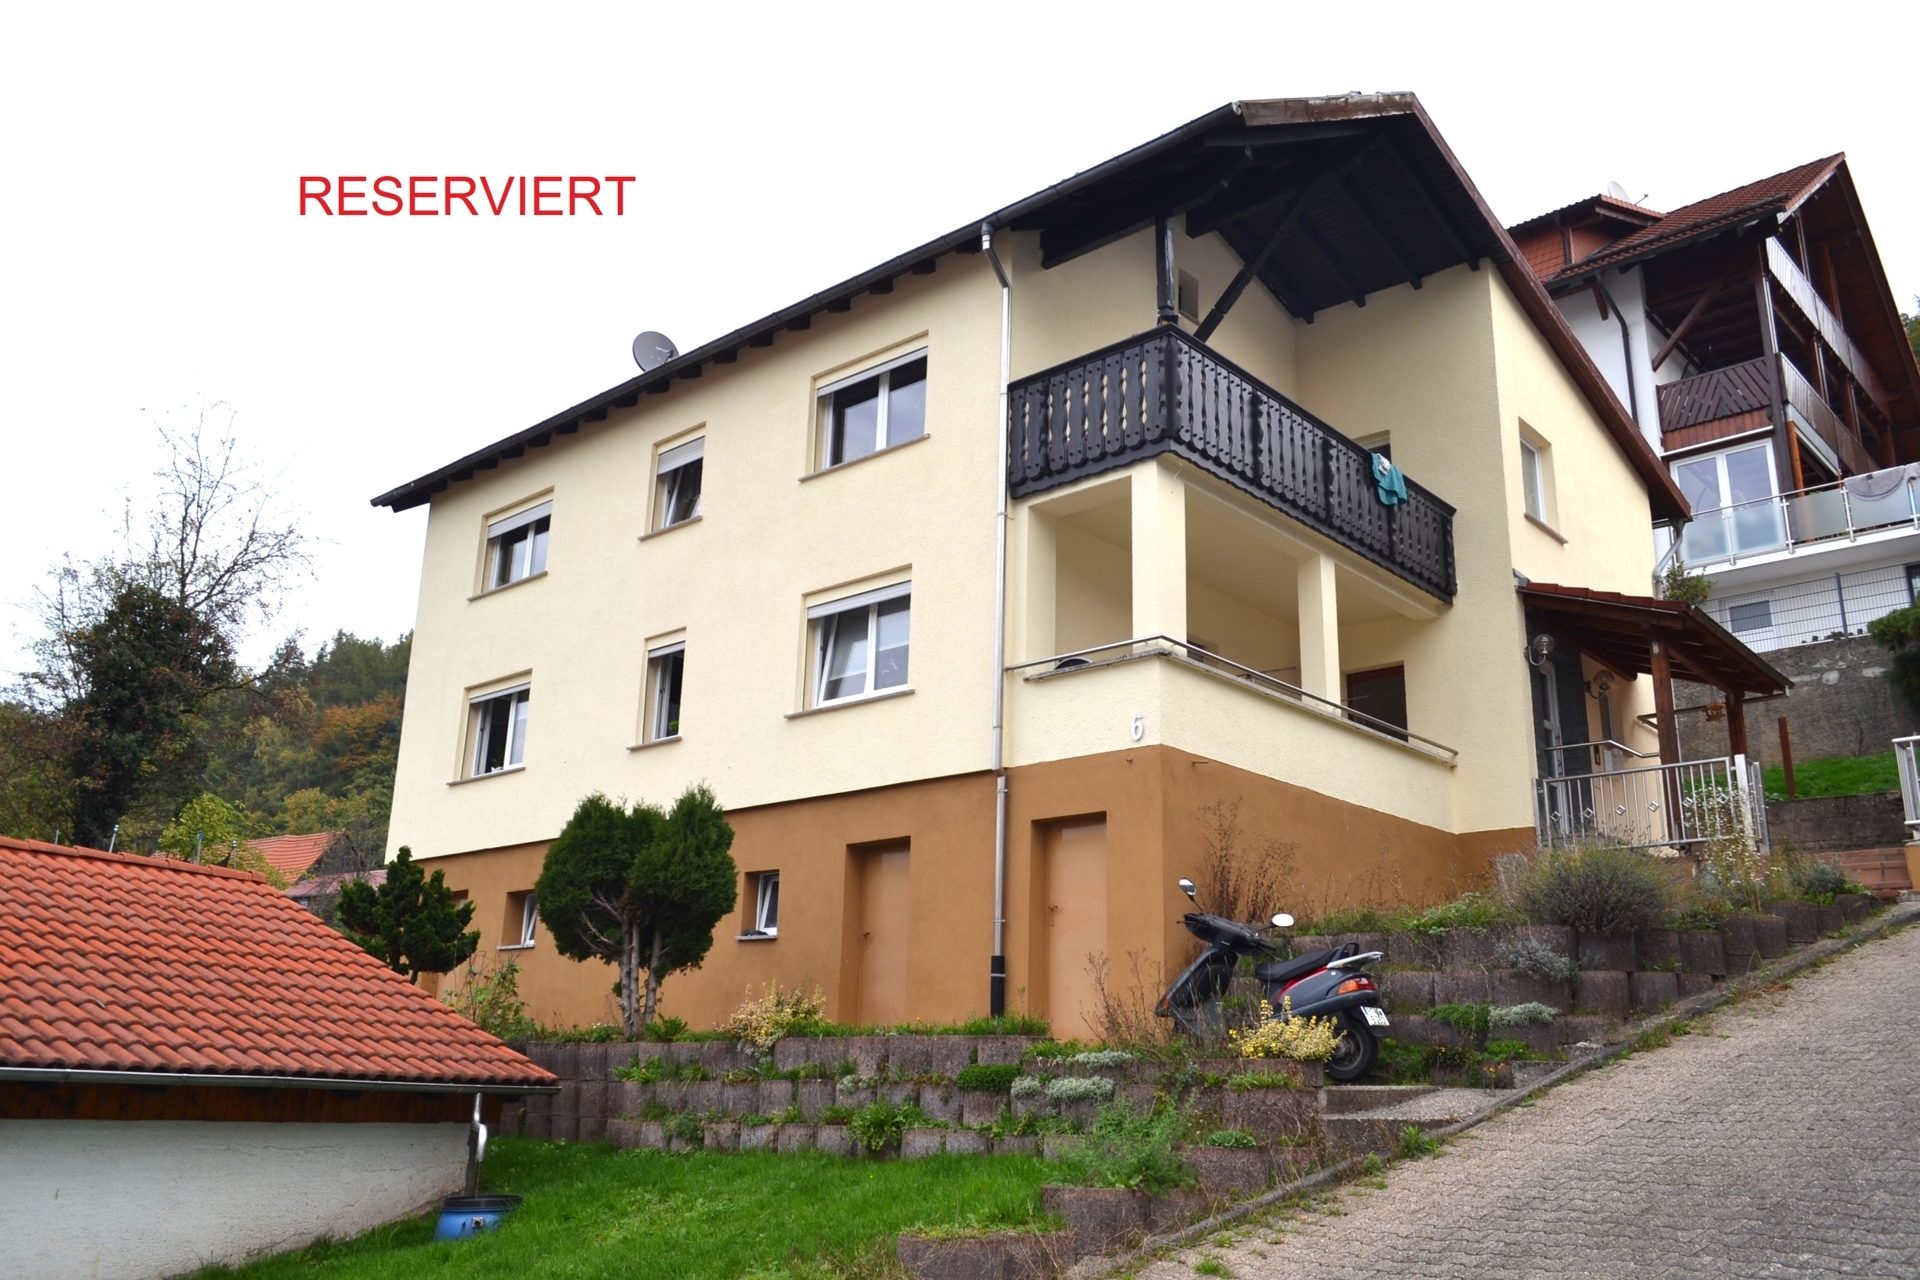 Immobilienangebot - Wald-Michelbach - Alle - GEPFLEGTES 2-FAMILIENHAUS IN WALD-MICHELBACH